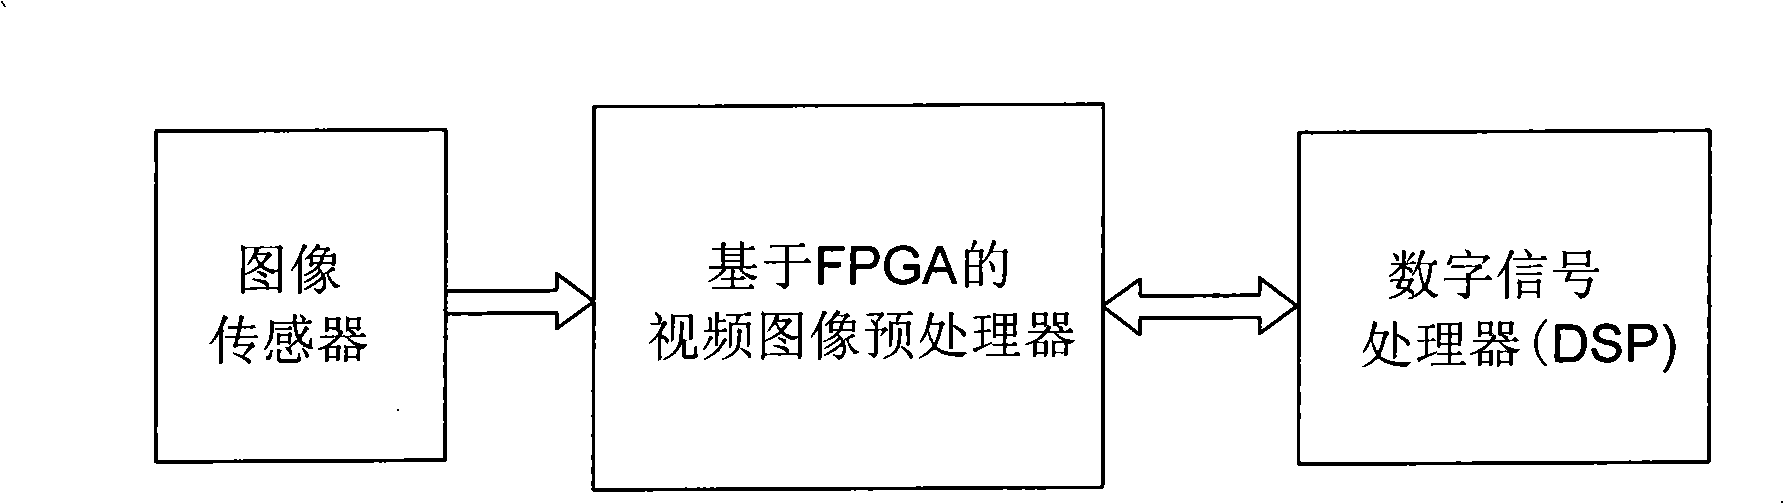 Video image preprocessor on basis of FPGA